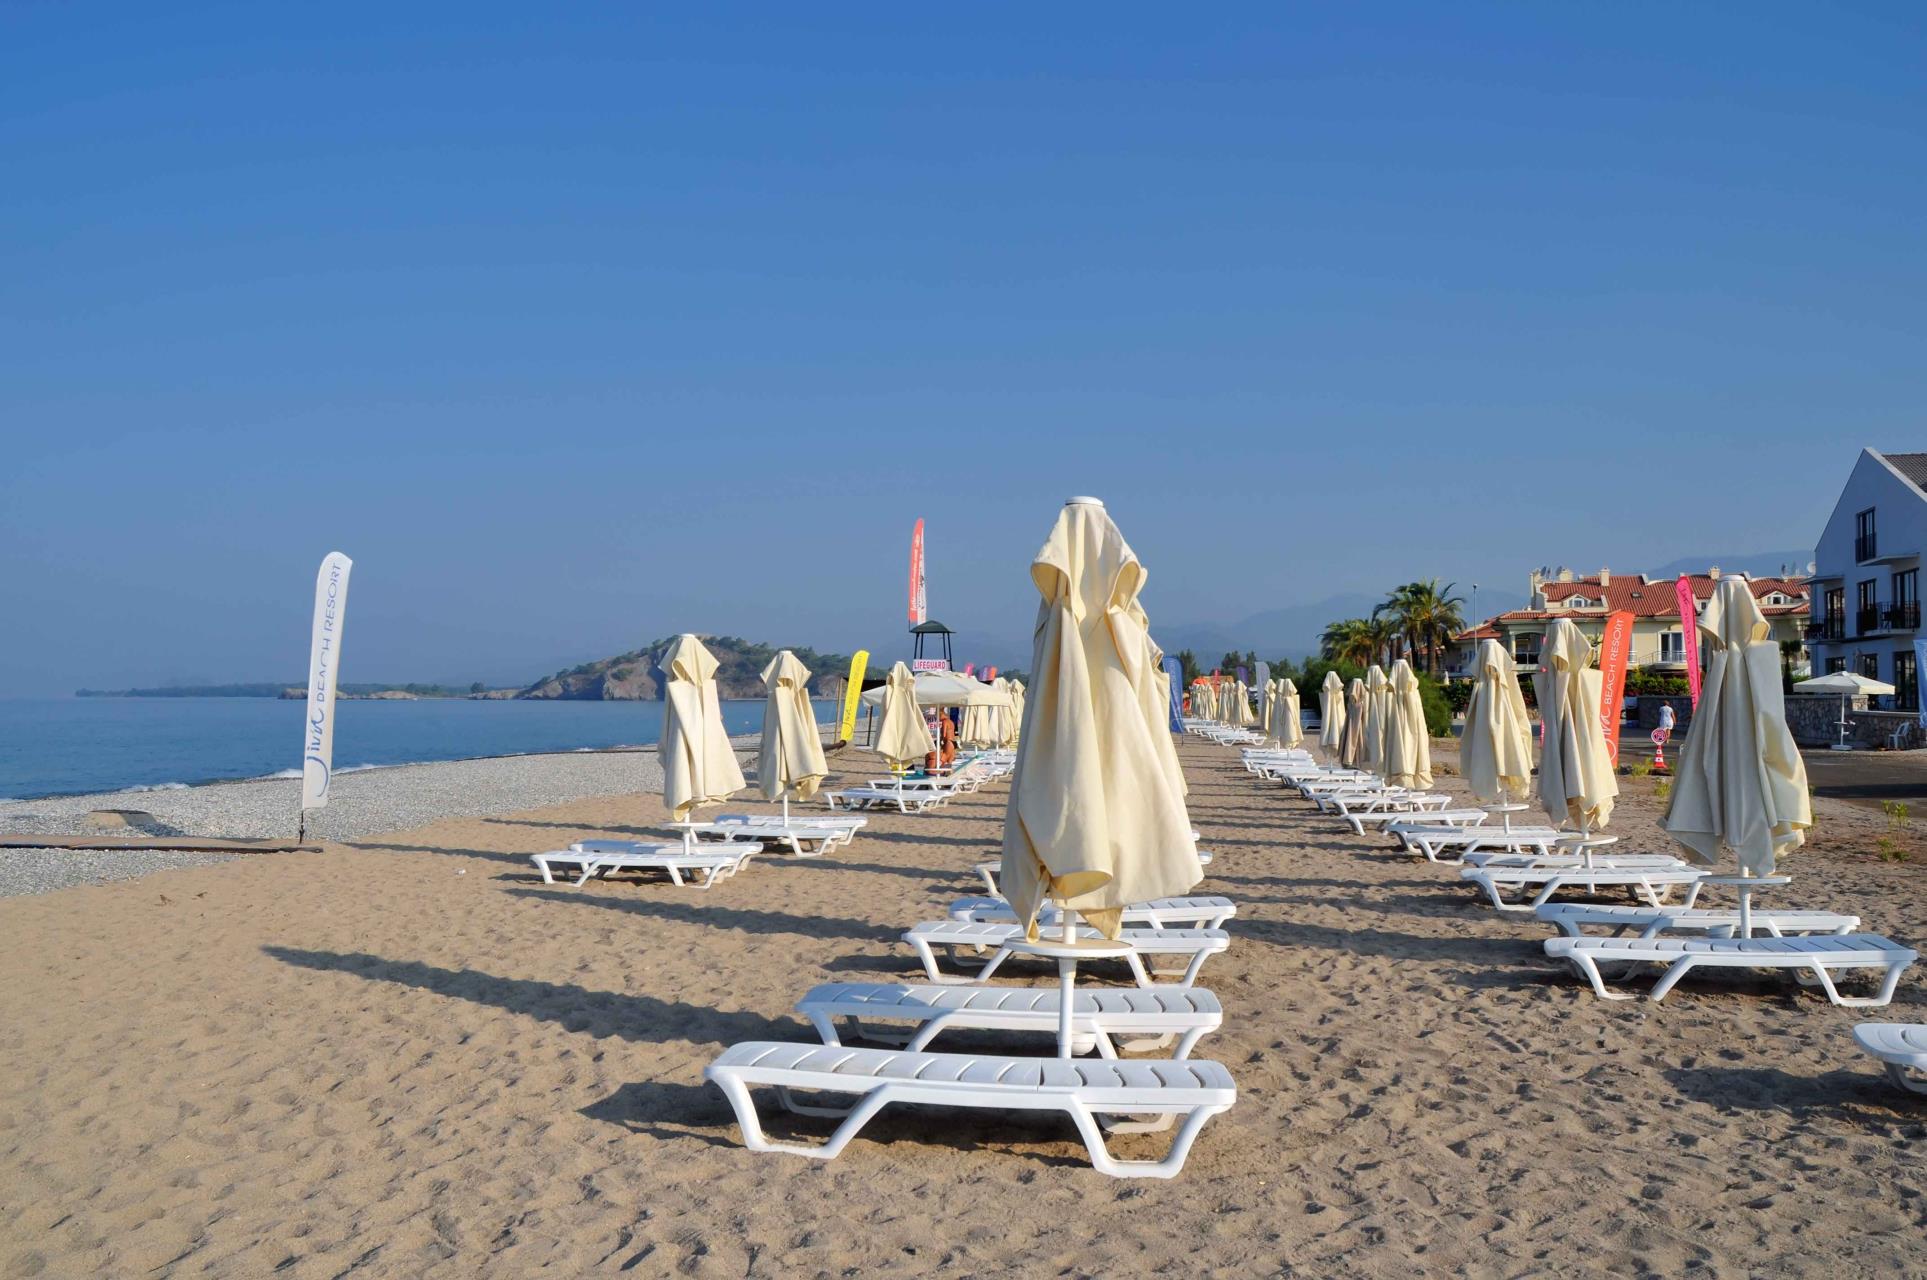 Jiva Beach Resort - All Inclusive